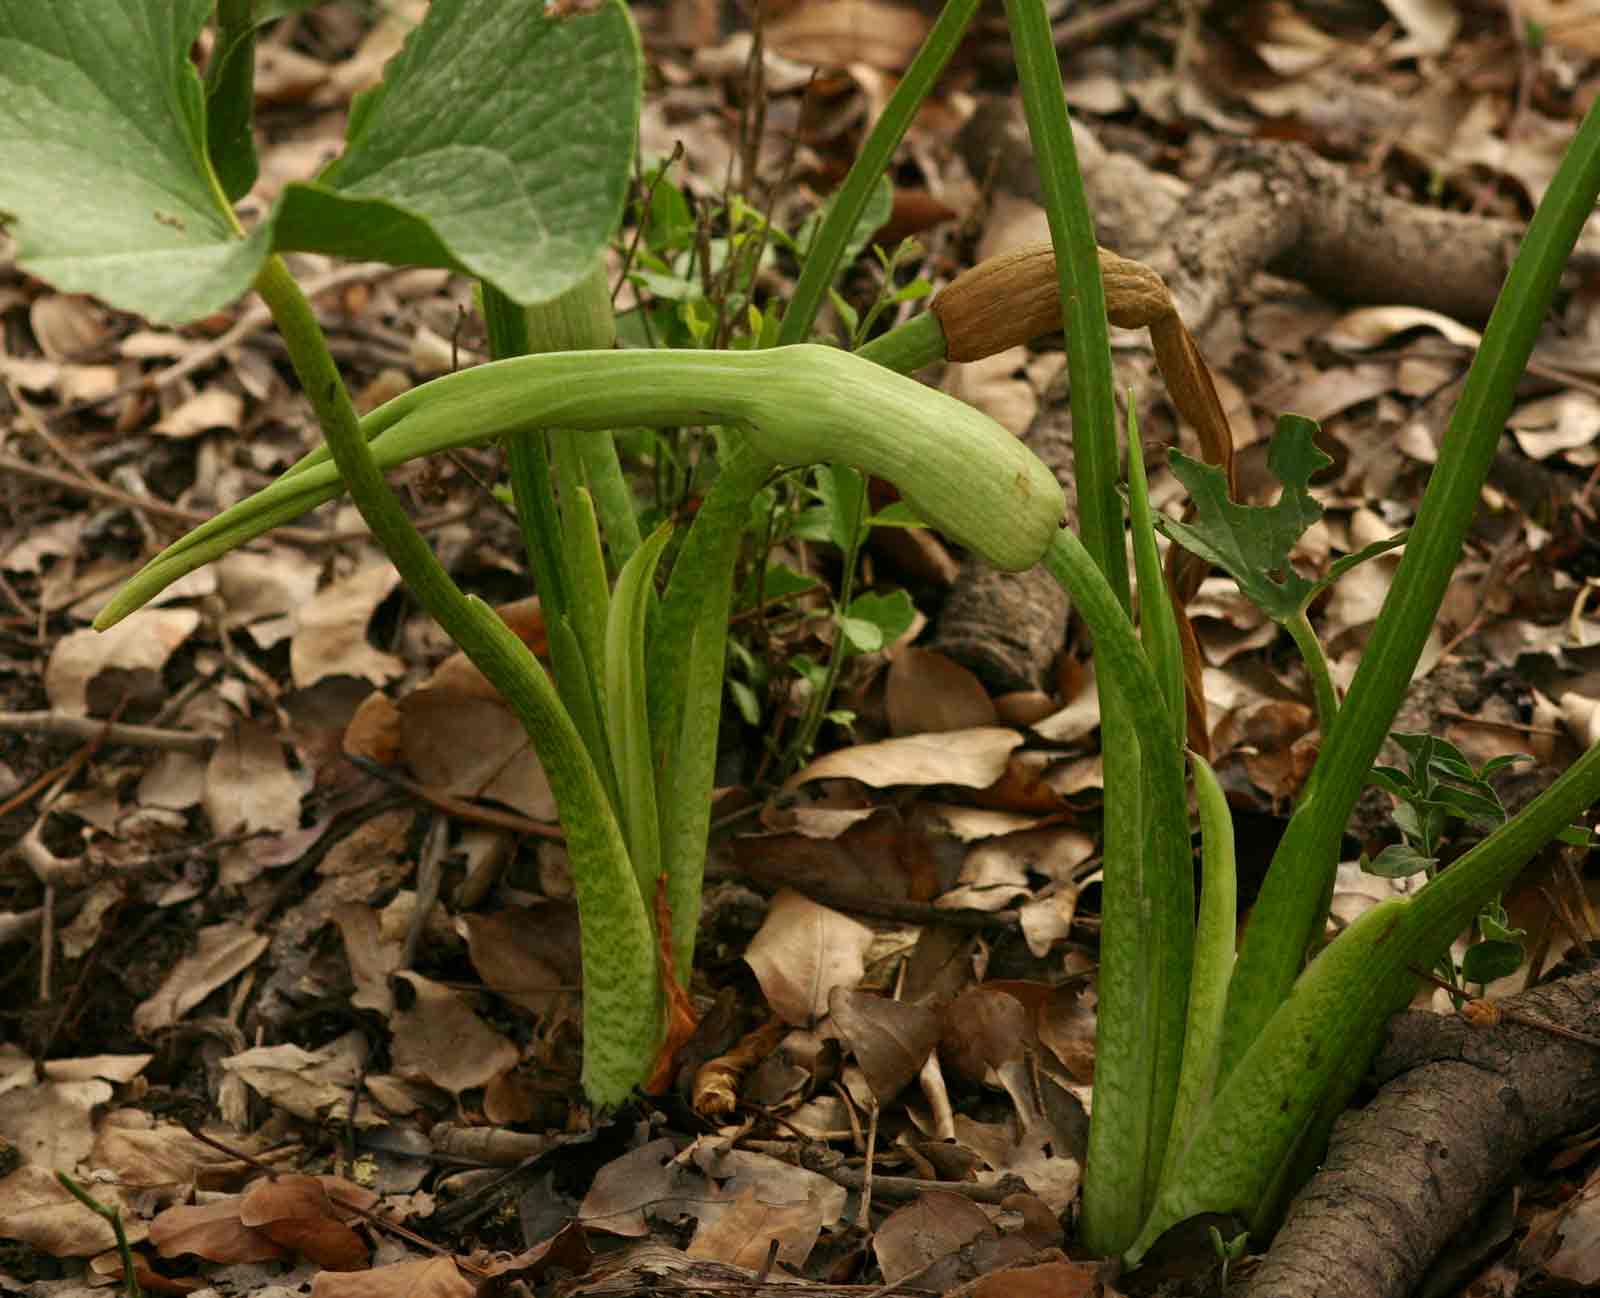 Stylochaeton natalensis subsp. natalensis